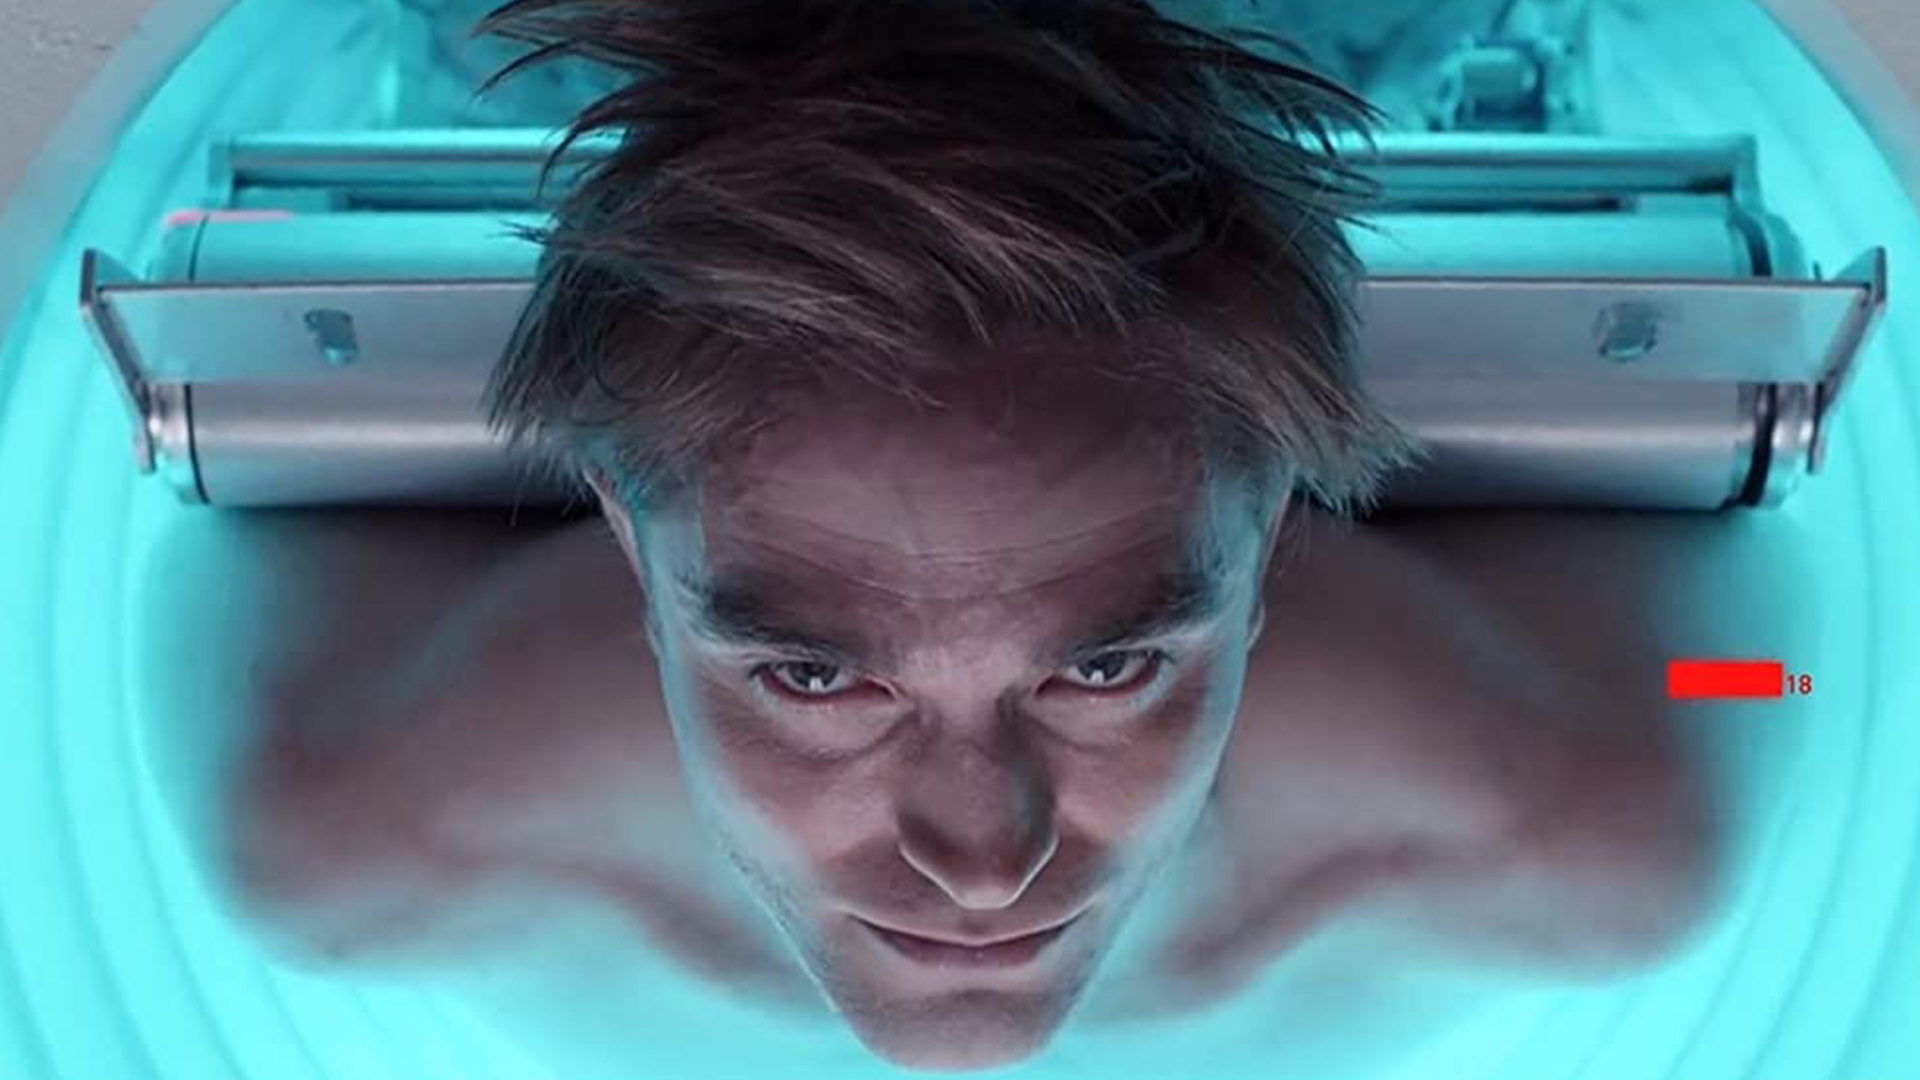 Bong Joon-ho unveils trailer for Robert Pattinson starrer sci-fi thriller 'Mickey 17'